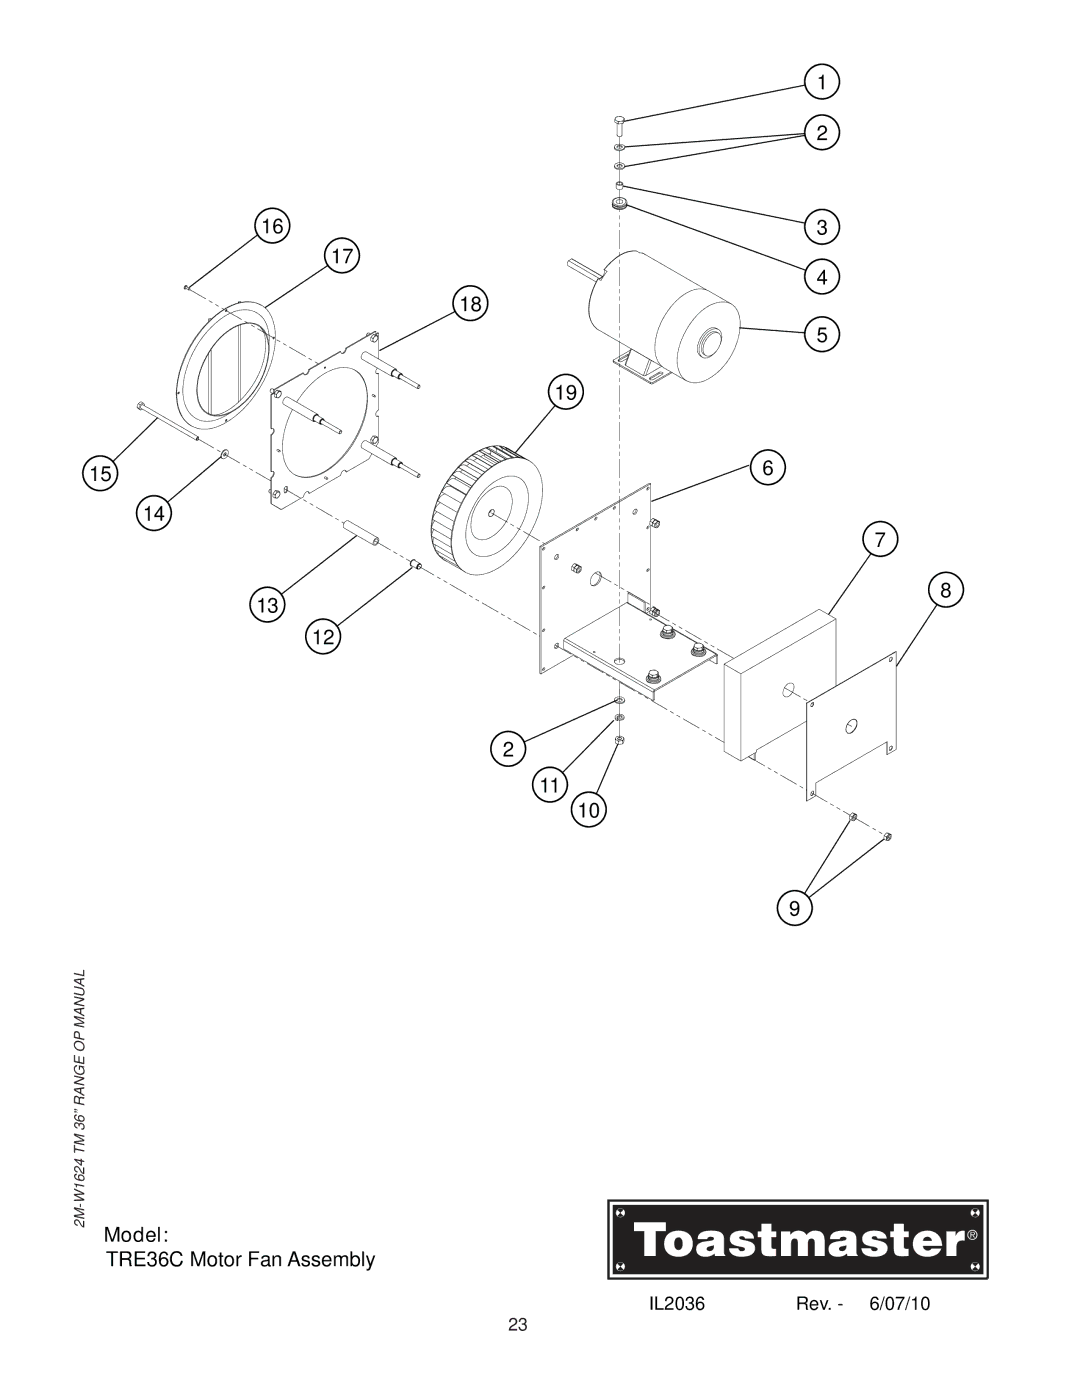 Toastmaster TRE36D manual TRE36C Motor Fan Assembly 